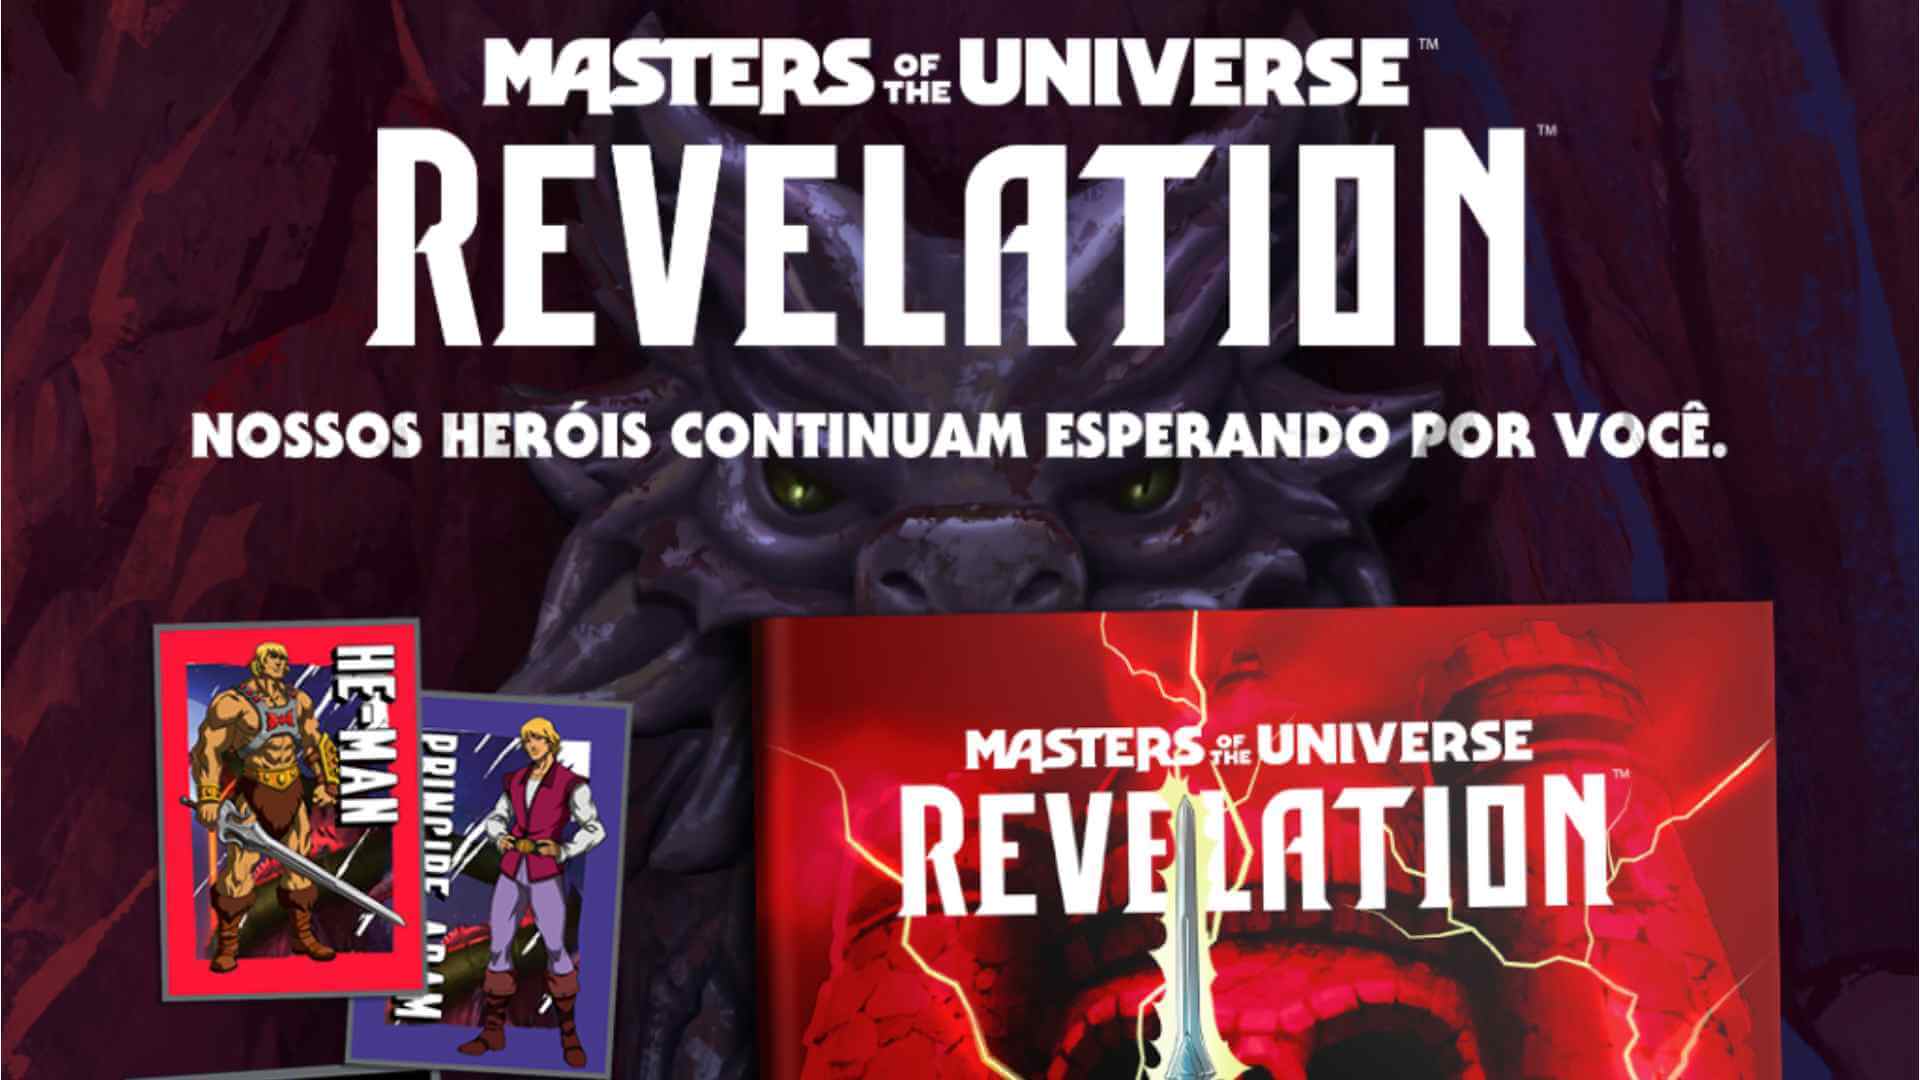 MASTERS-OF-THE-UNIVERSE-REVELATION-BANNER-LEPOP